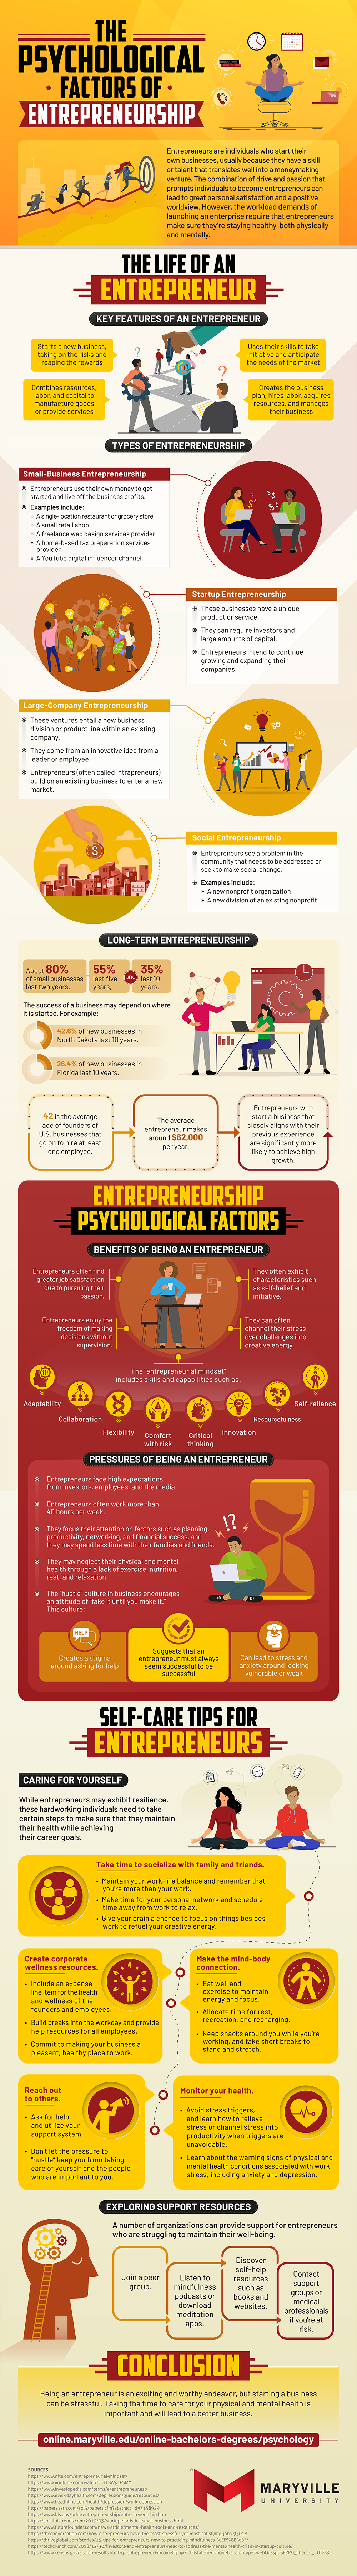 The psychological factors of entrepreneurship.